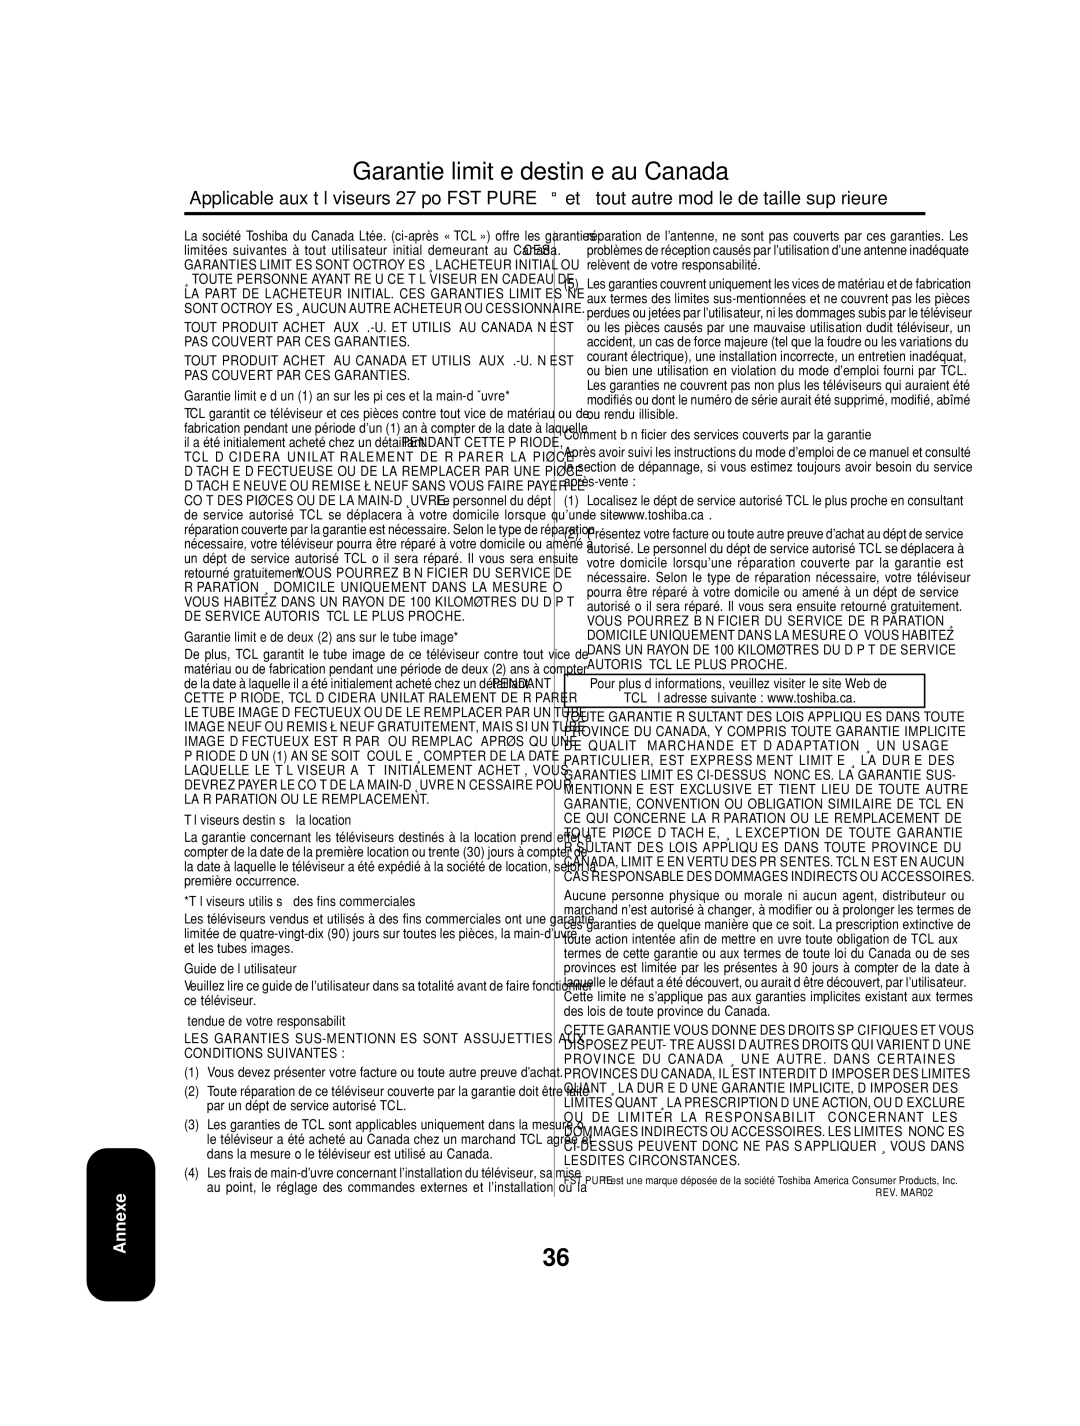 Toshiba 27AF53 appendix Garantie limitée destinée au Canada 